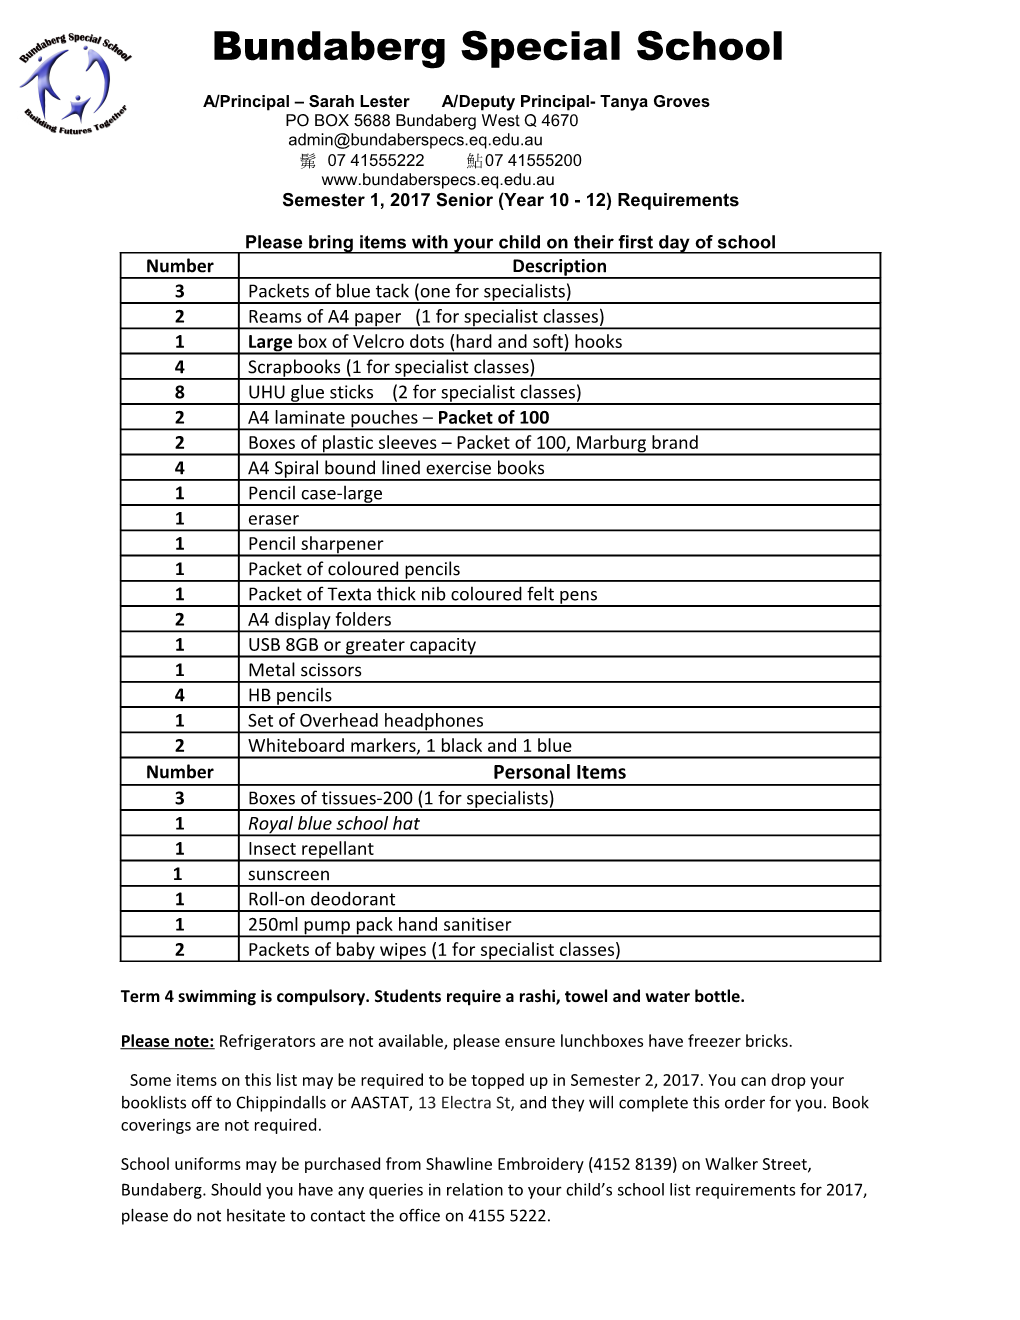 Semester 1, 2017 Senior (Year 10 - 12) Requirements